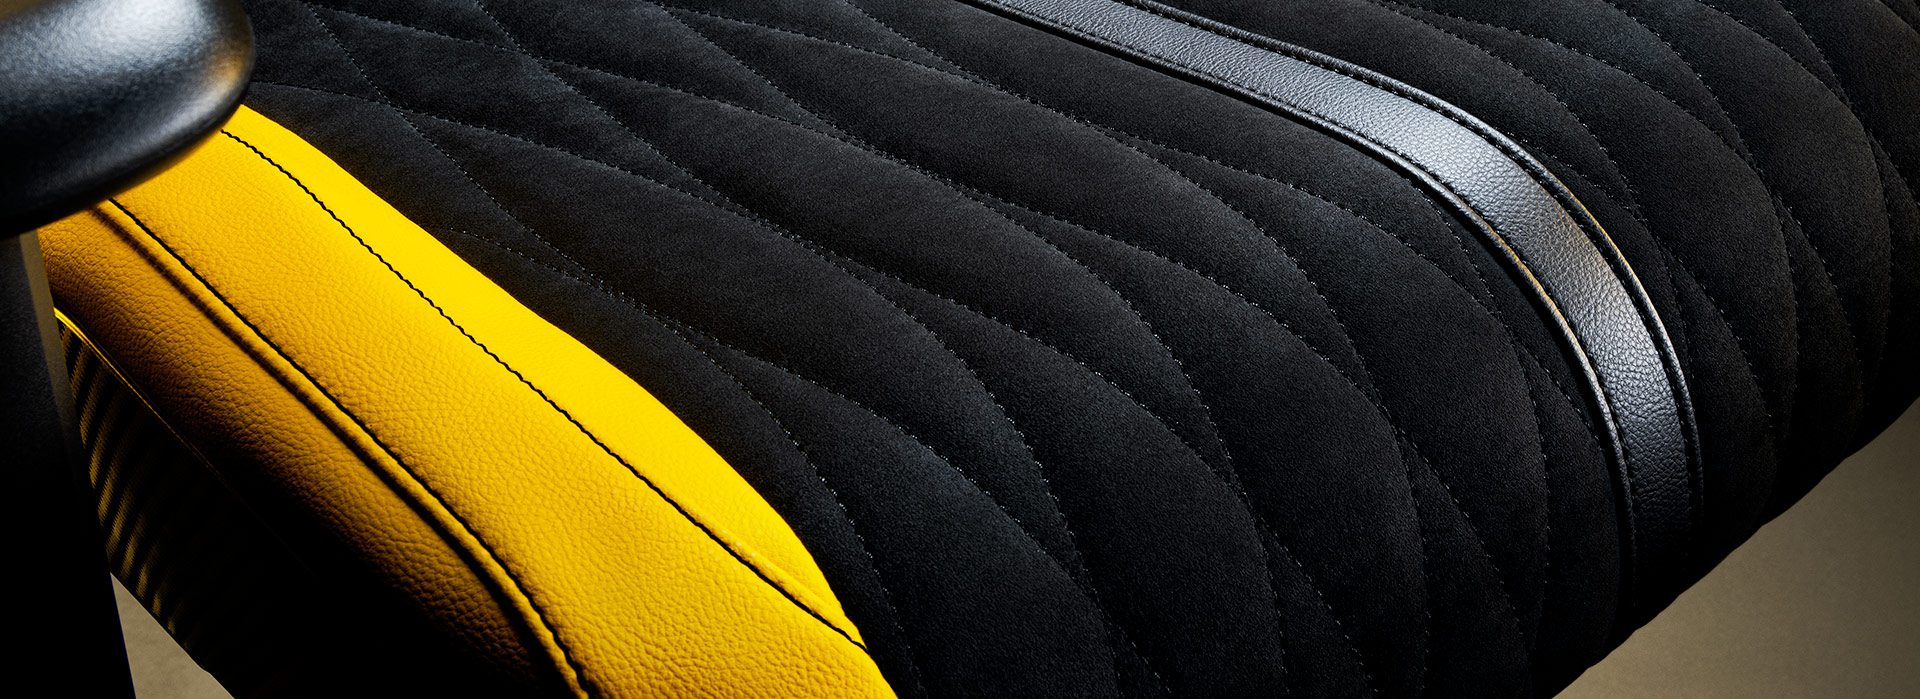 Alcantara on the seat base of the Razer Enki Koenigsegg special edition racing chair